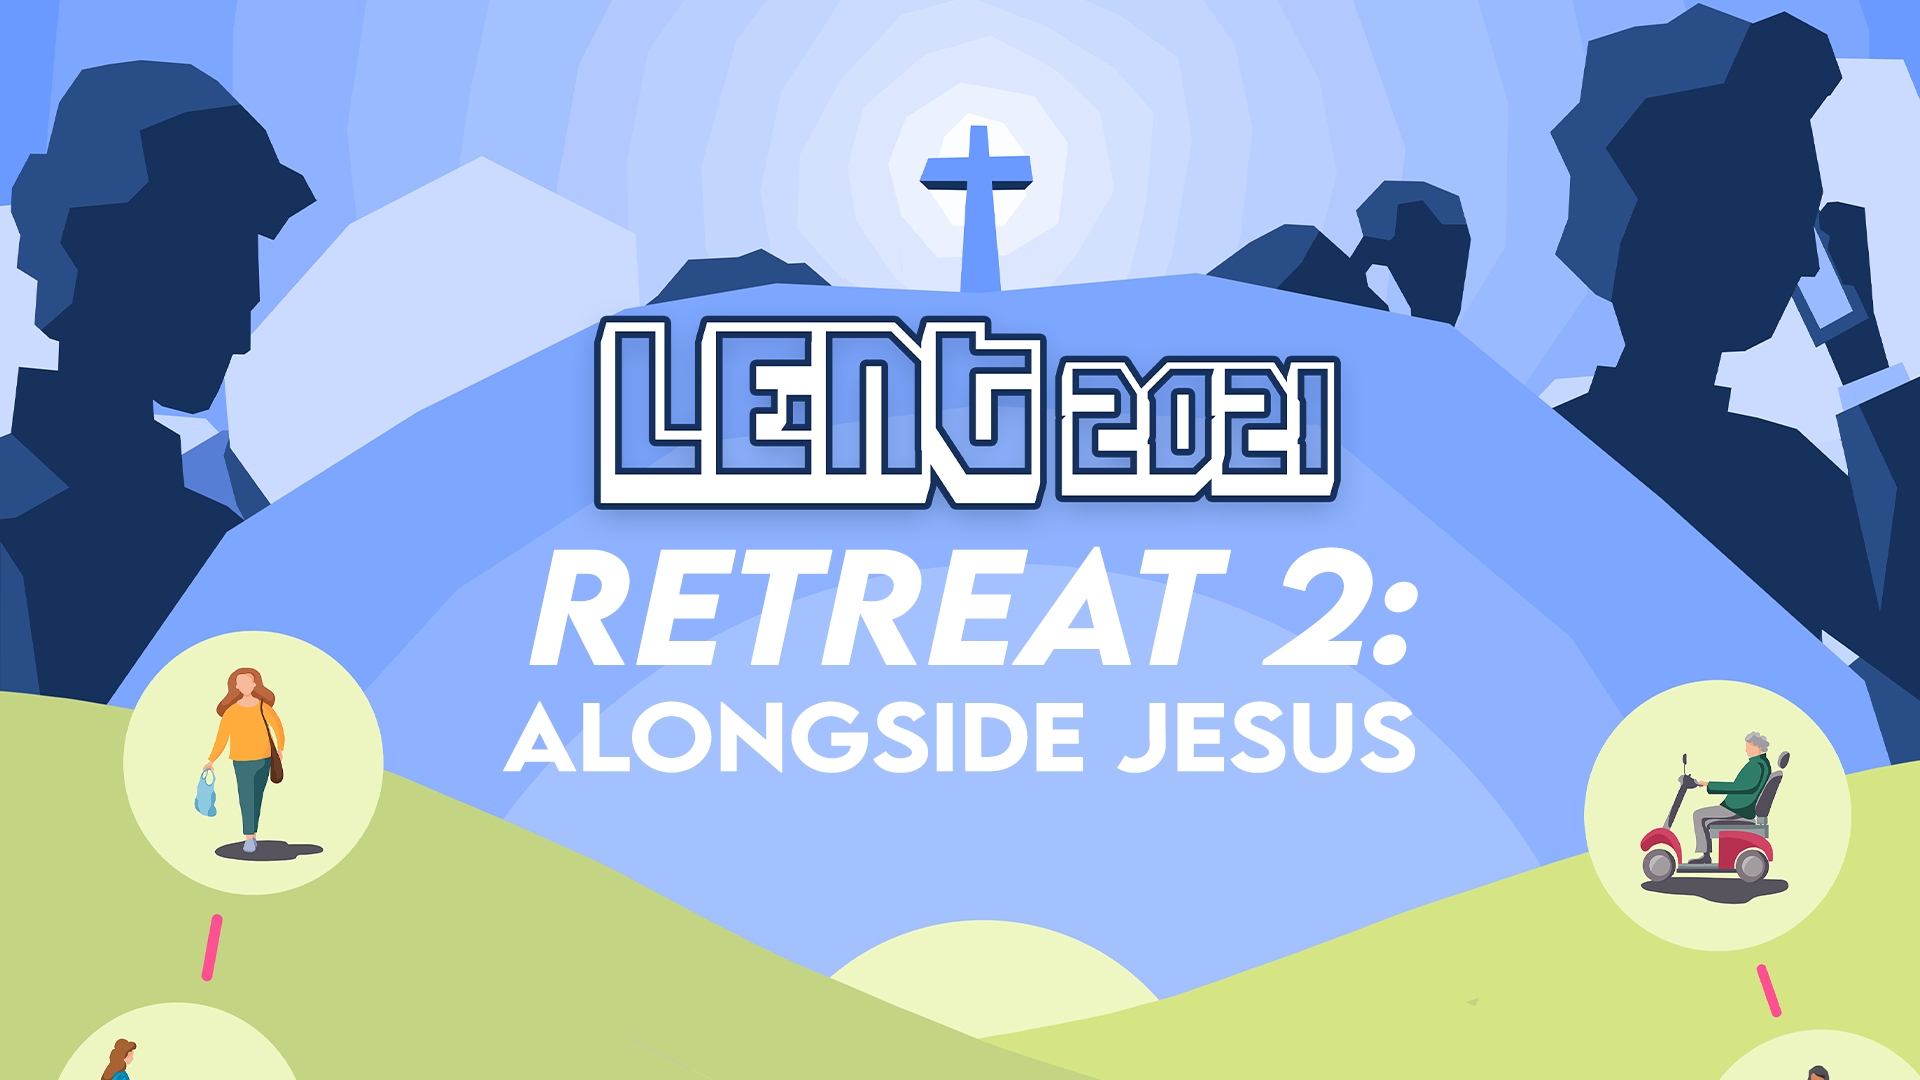 Alongside Jesus, a Lent Retreat